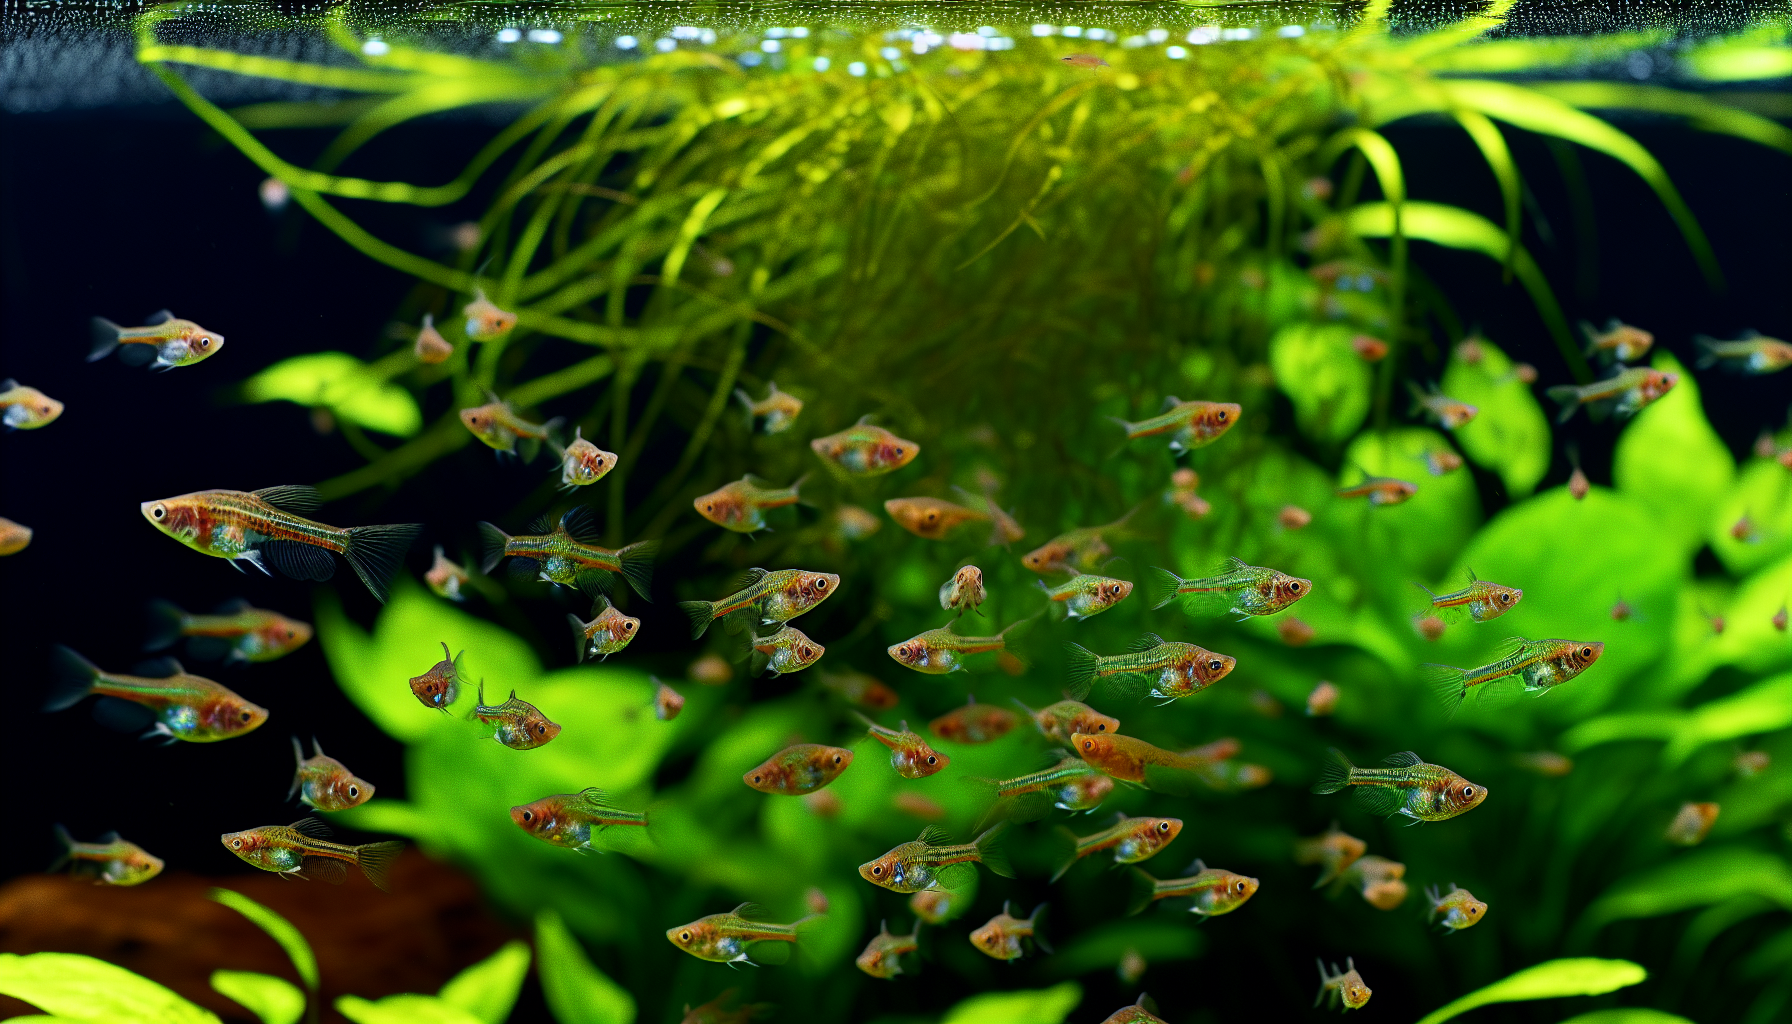 Shy fish hiding among floating aquatic plants